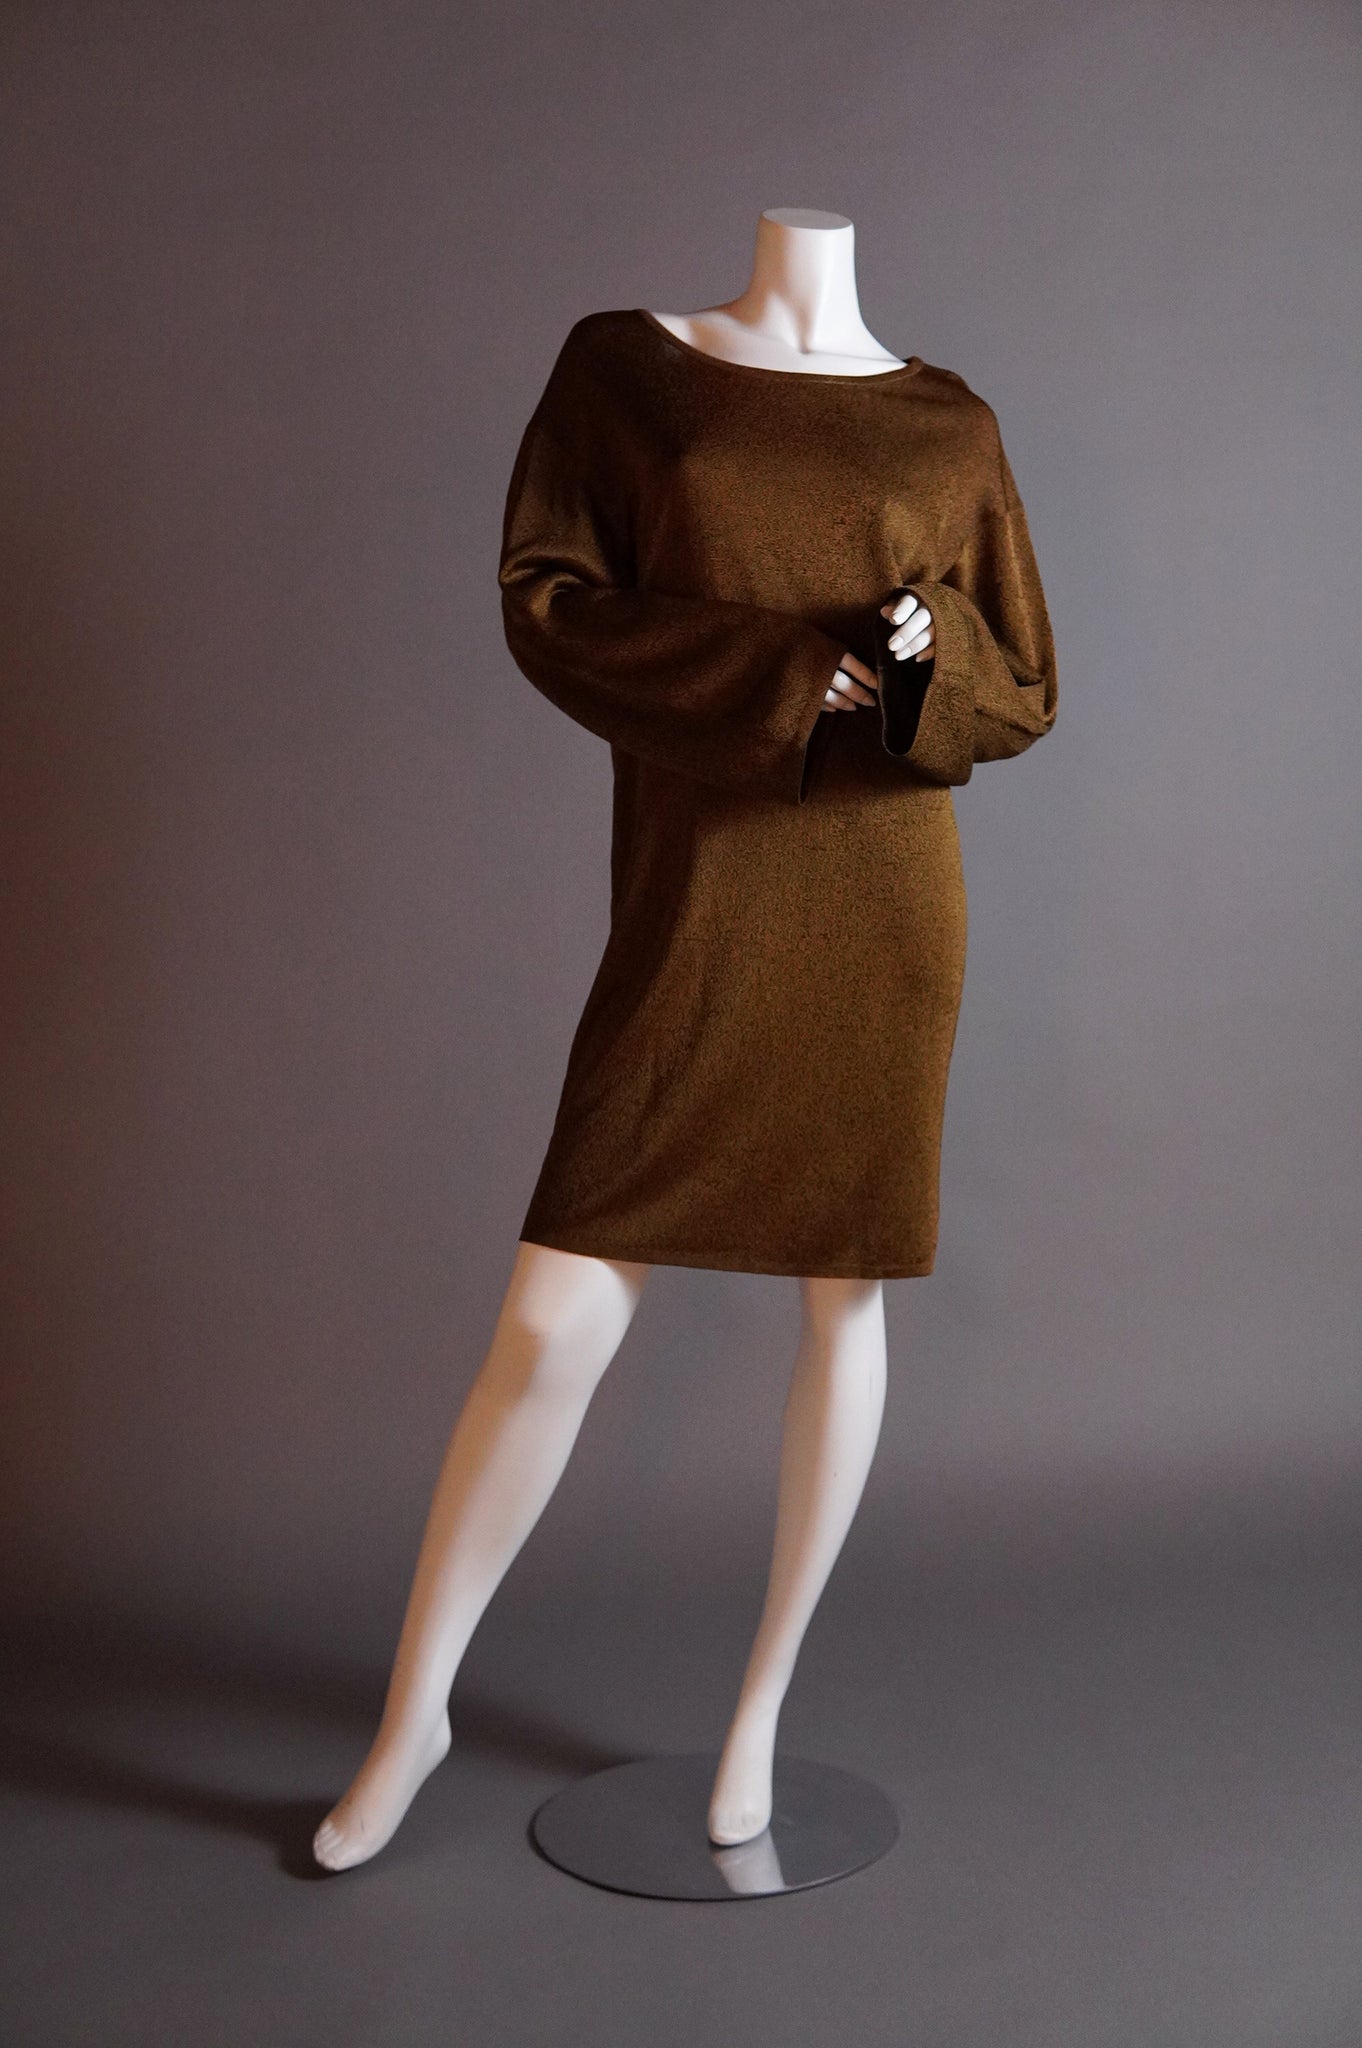 S/S 1984 Alaïa slouchy knit dress in bronze - S/M/L